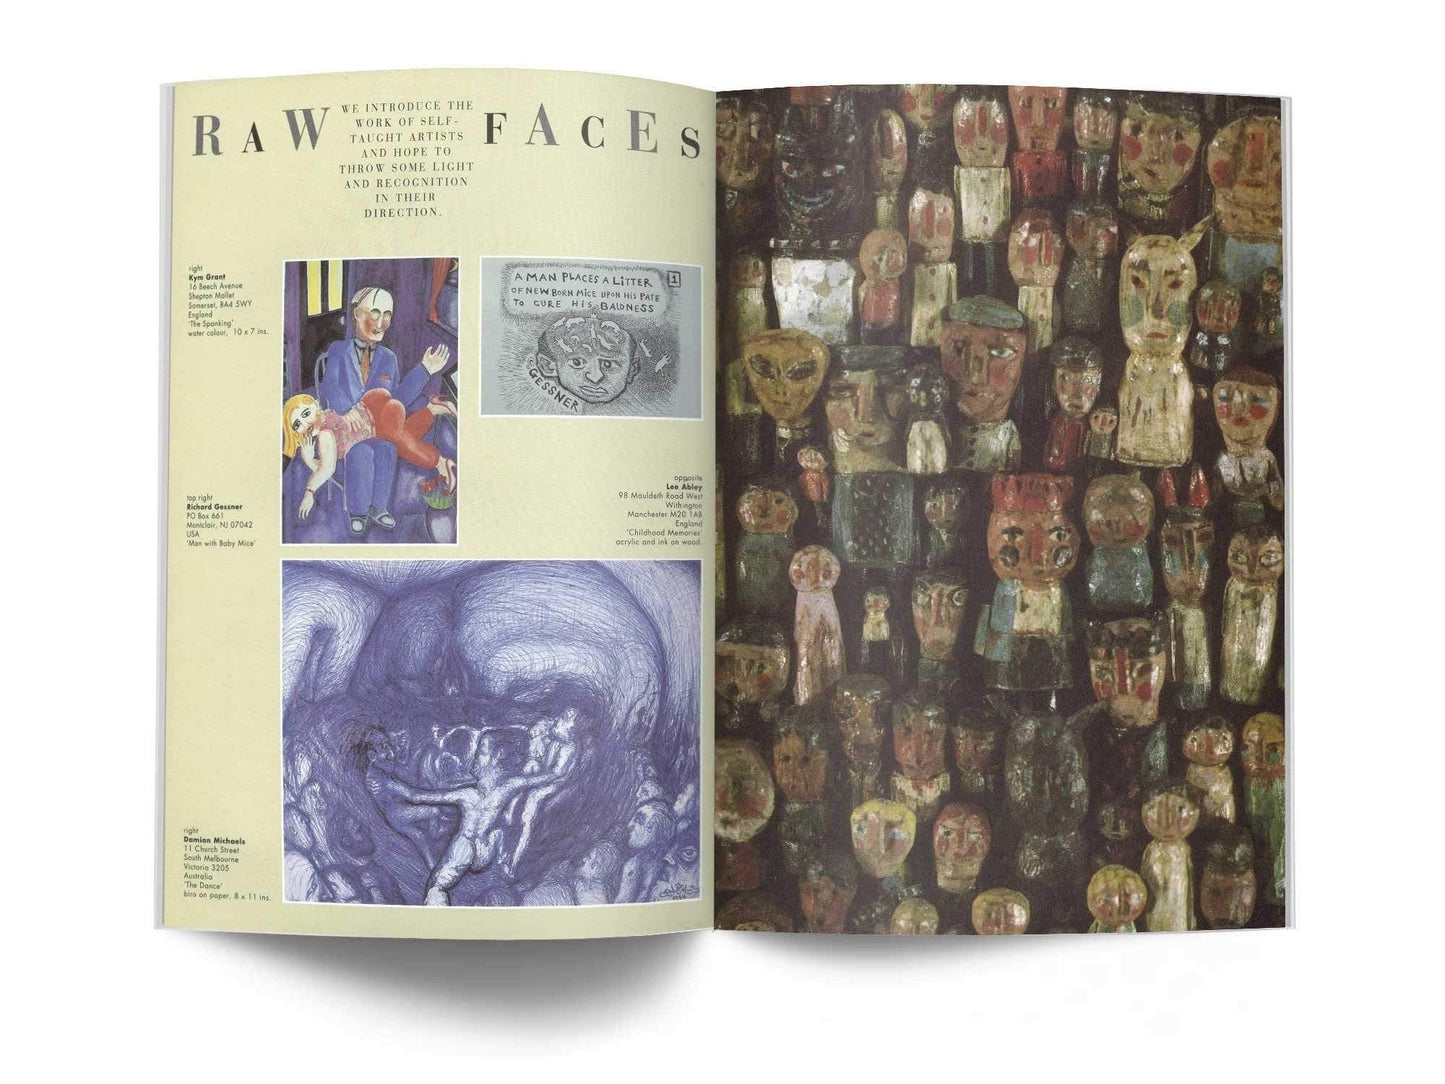 Raw Vision Magazine Print Issue #14